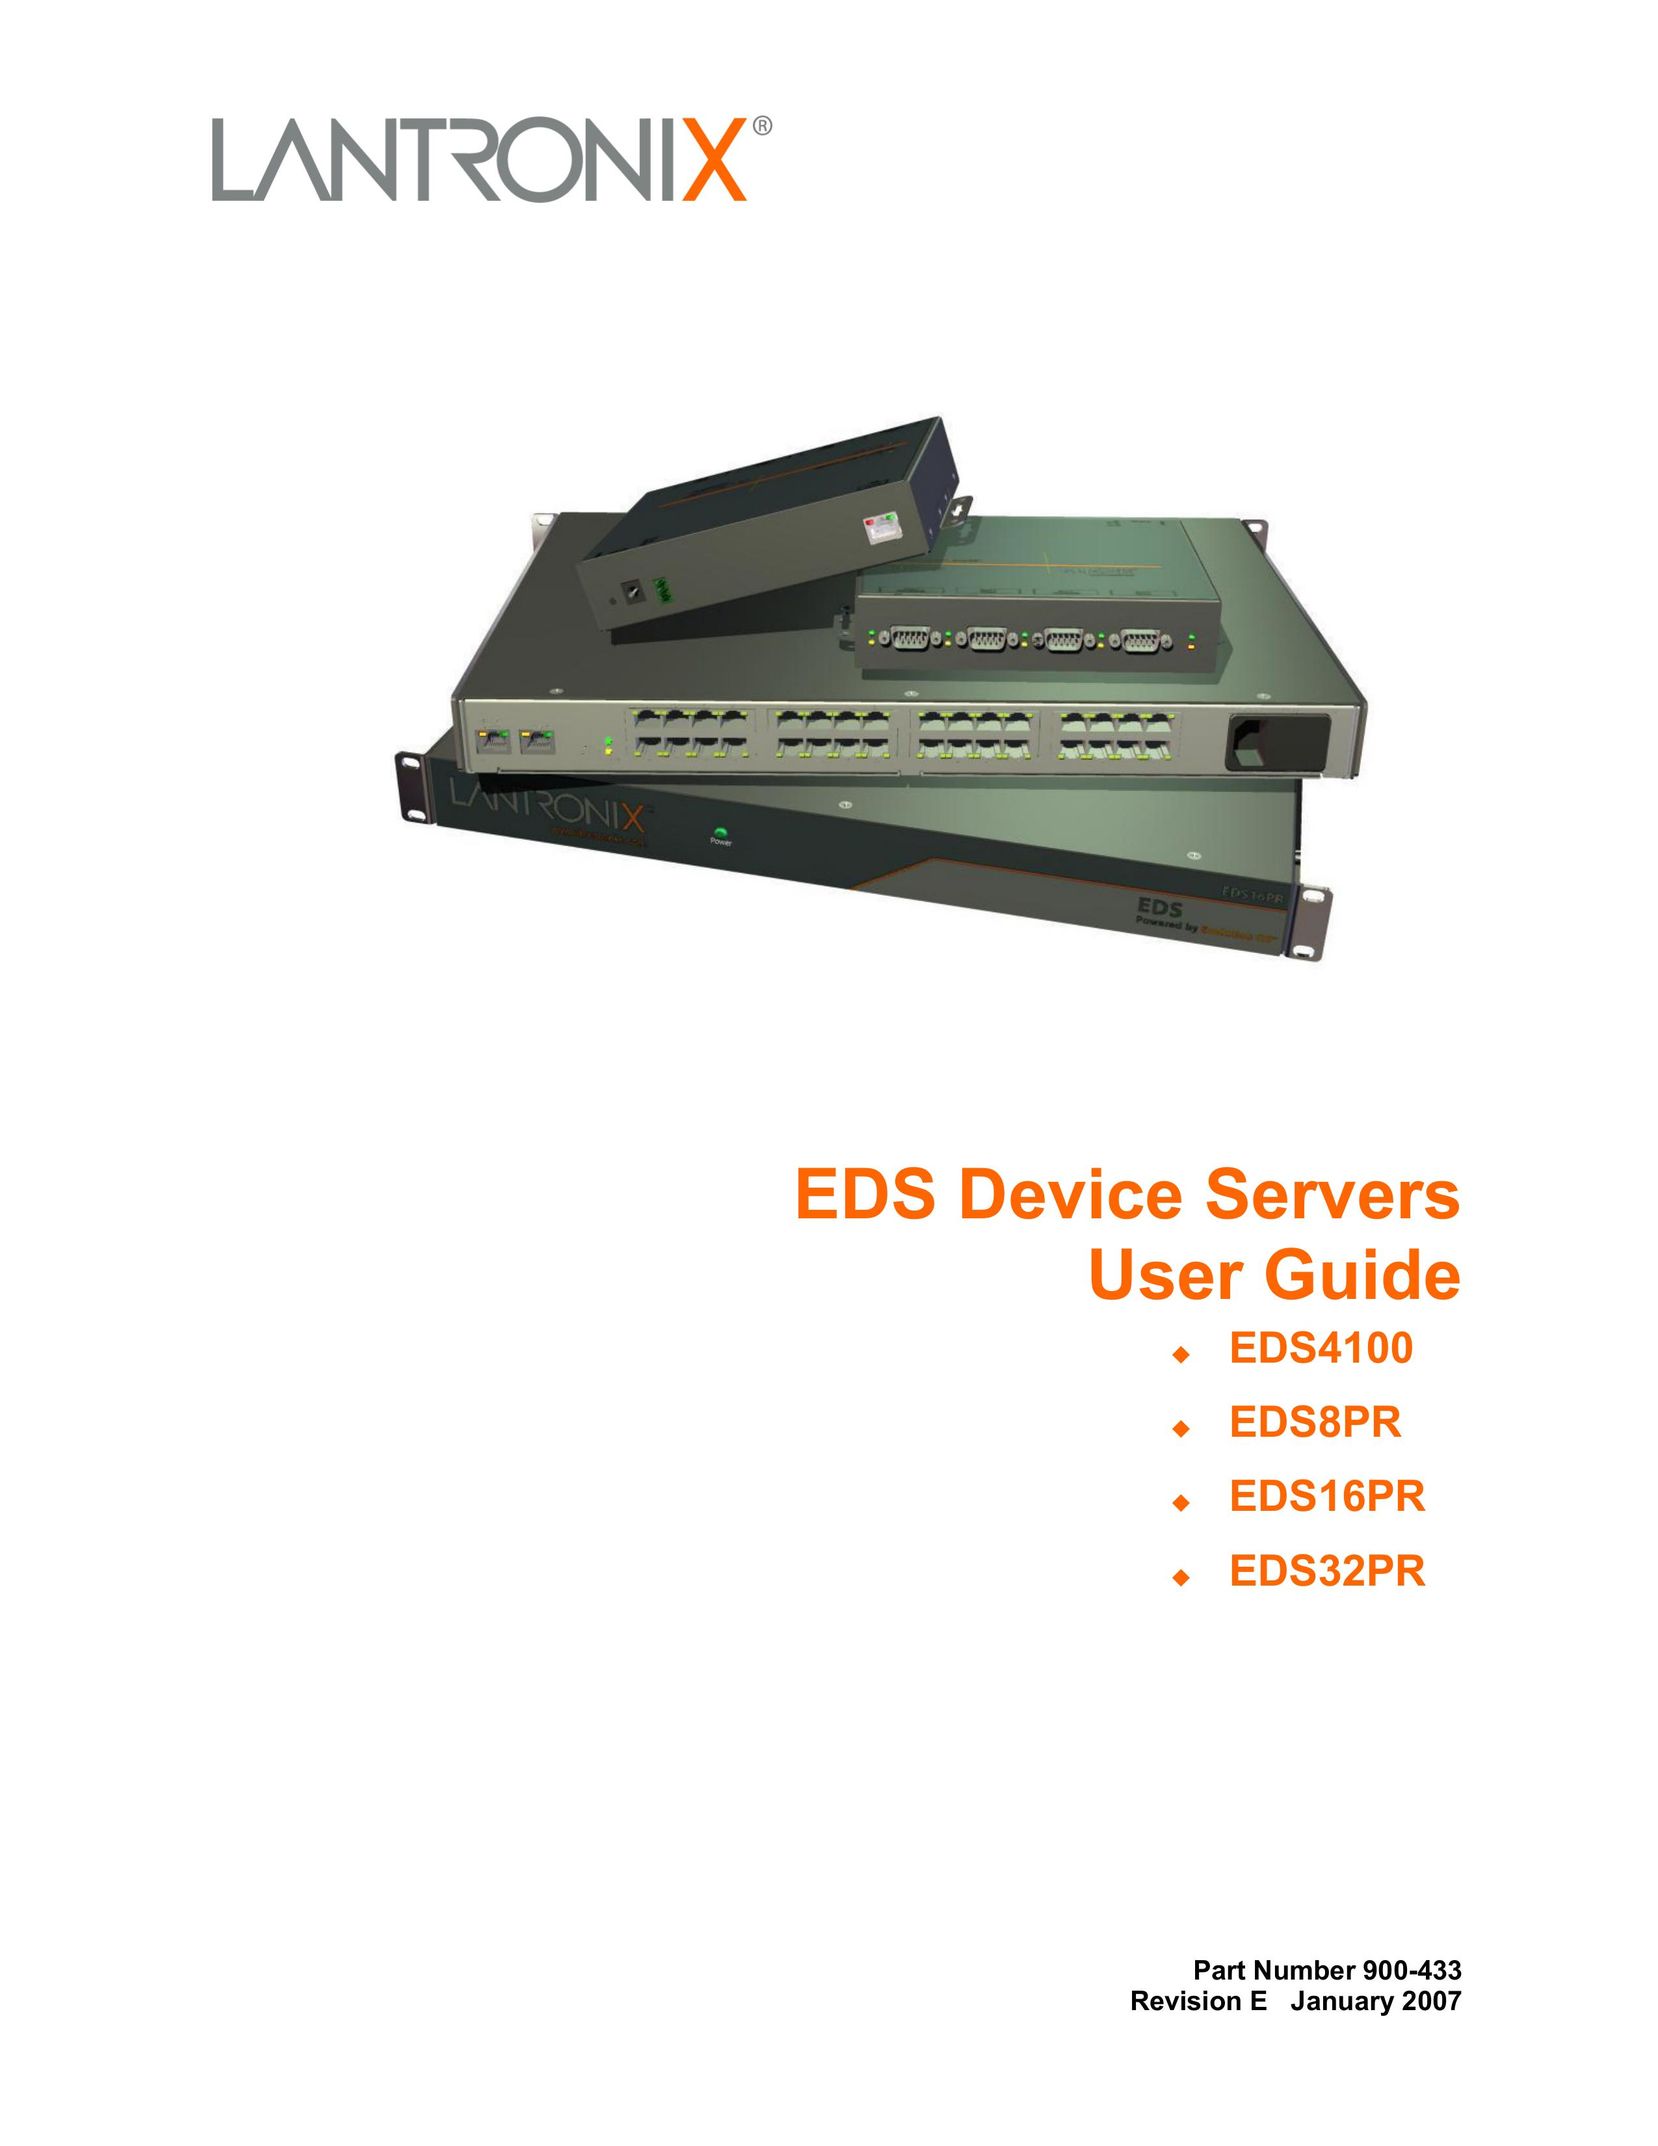 Lantronix EDS32PR Network Card User Manual